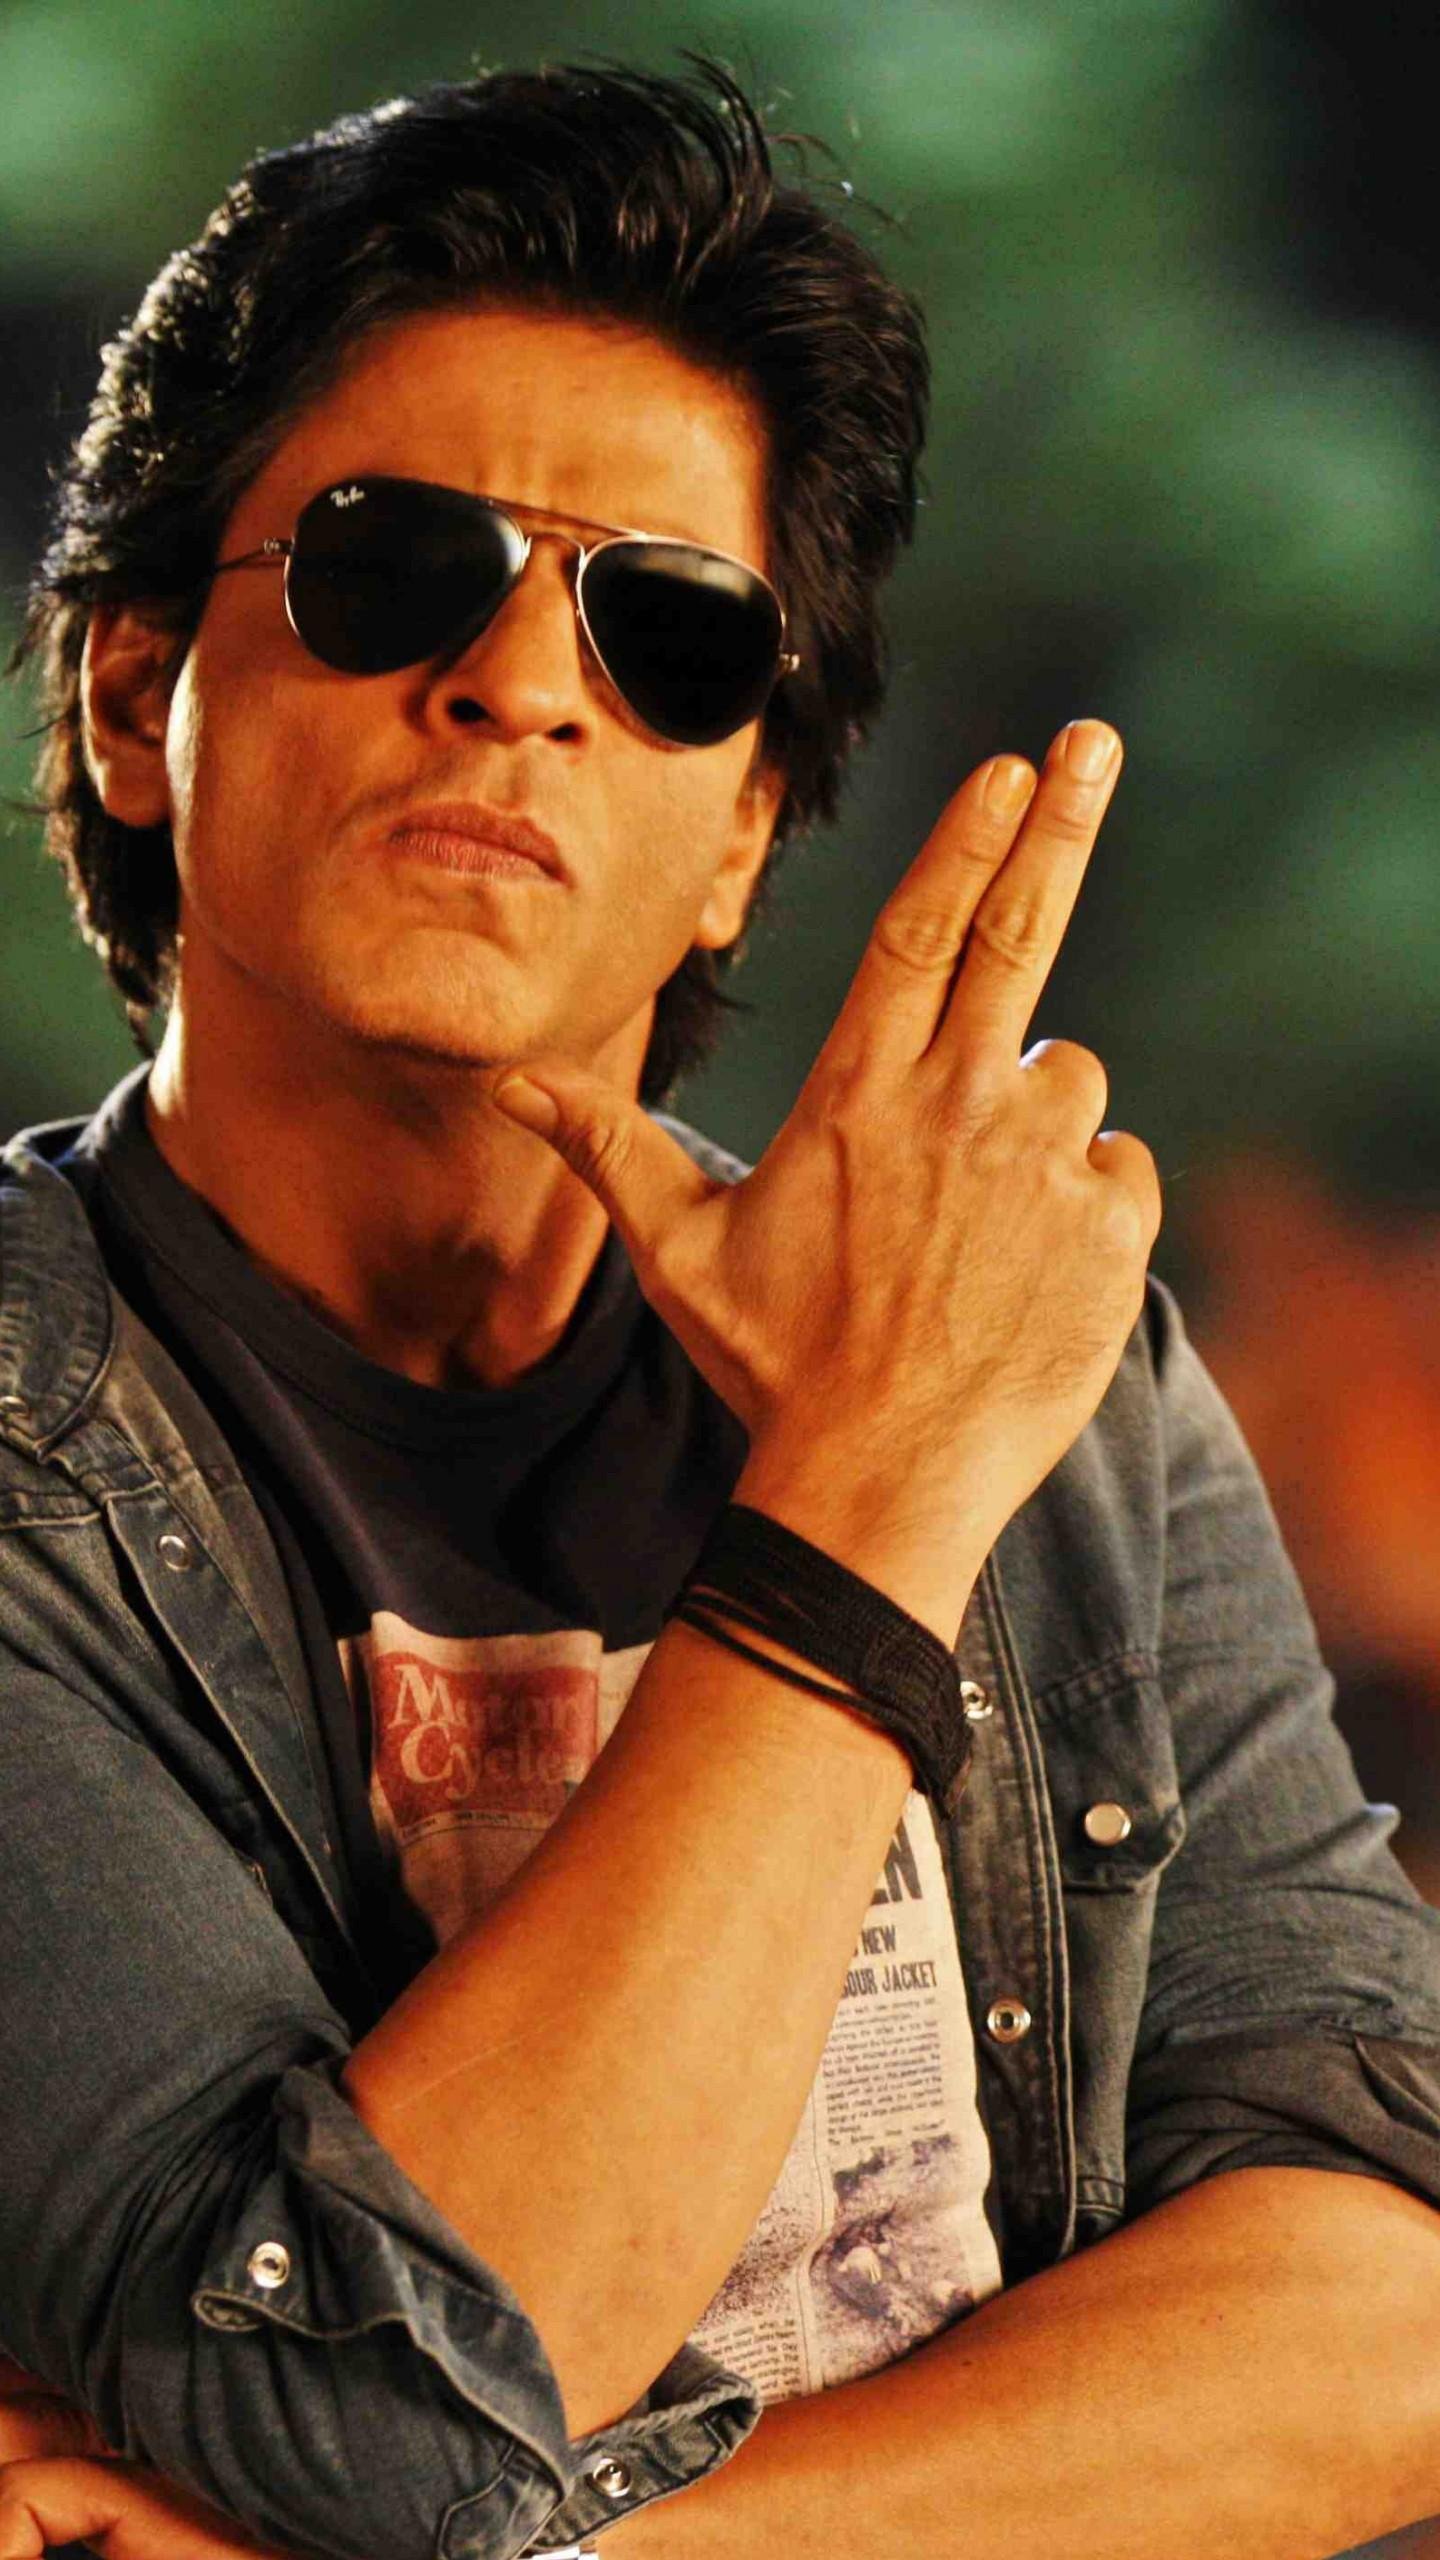 Shah Rukh Khan in sunglasses